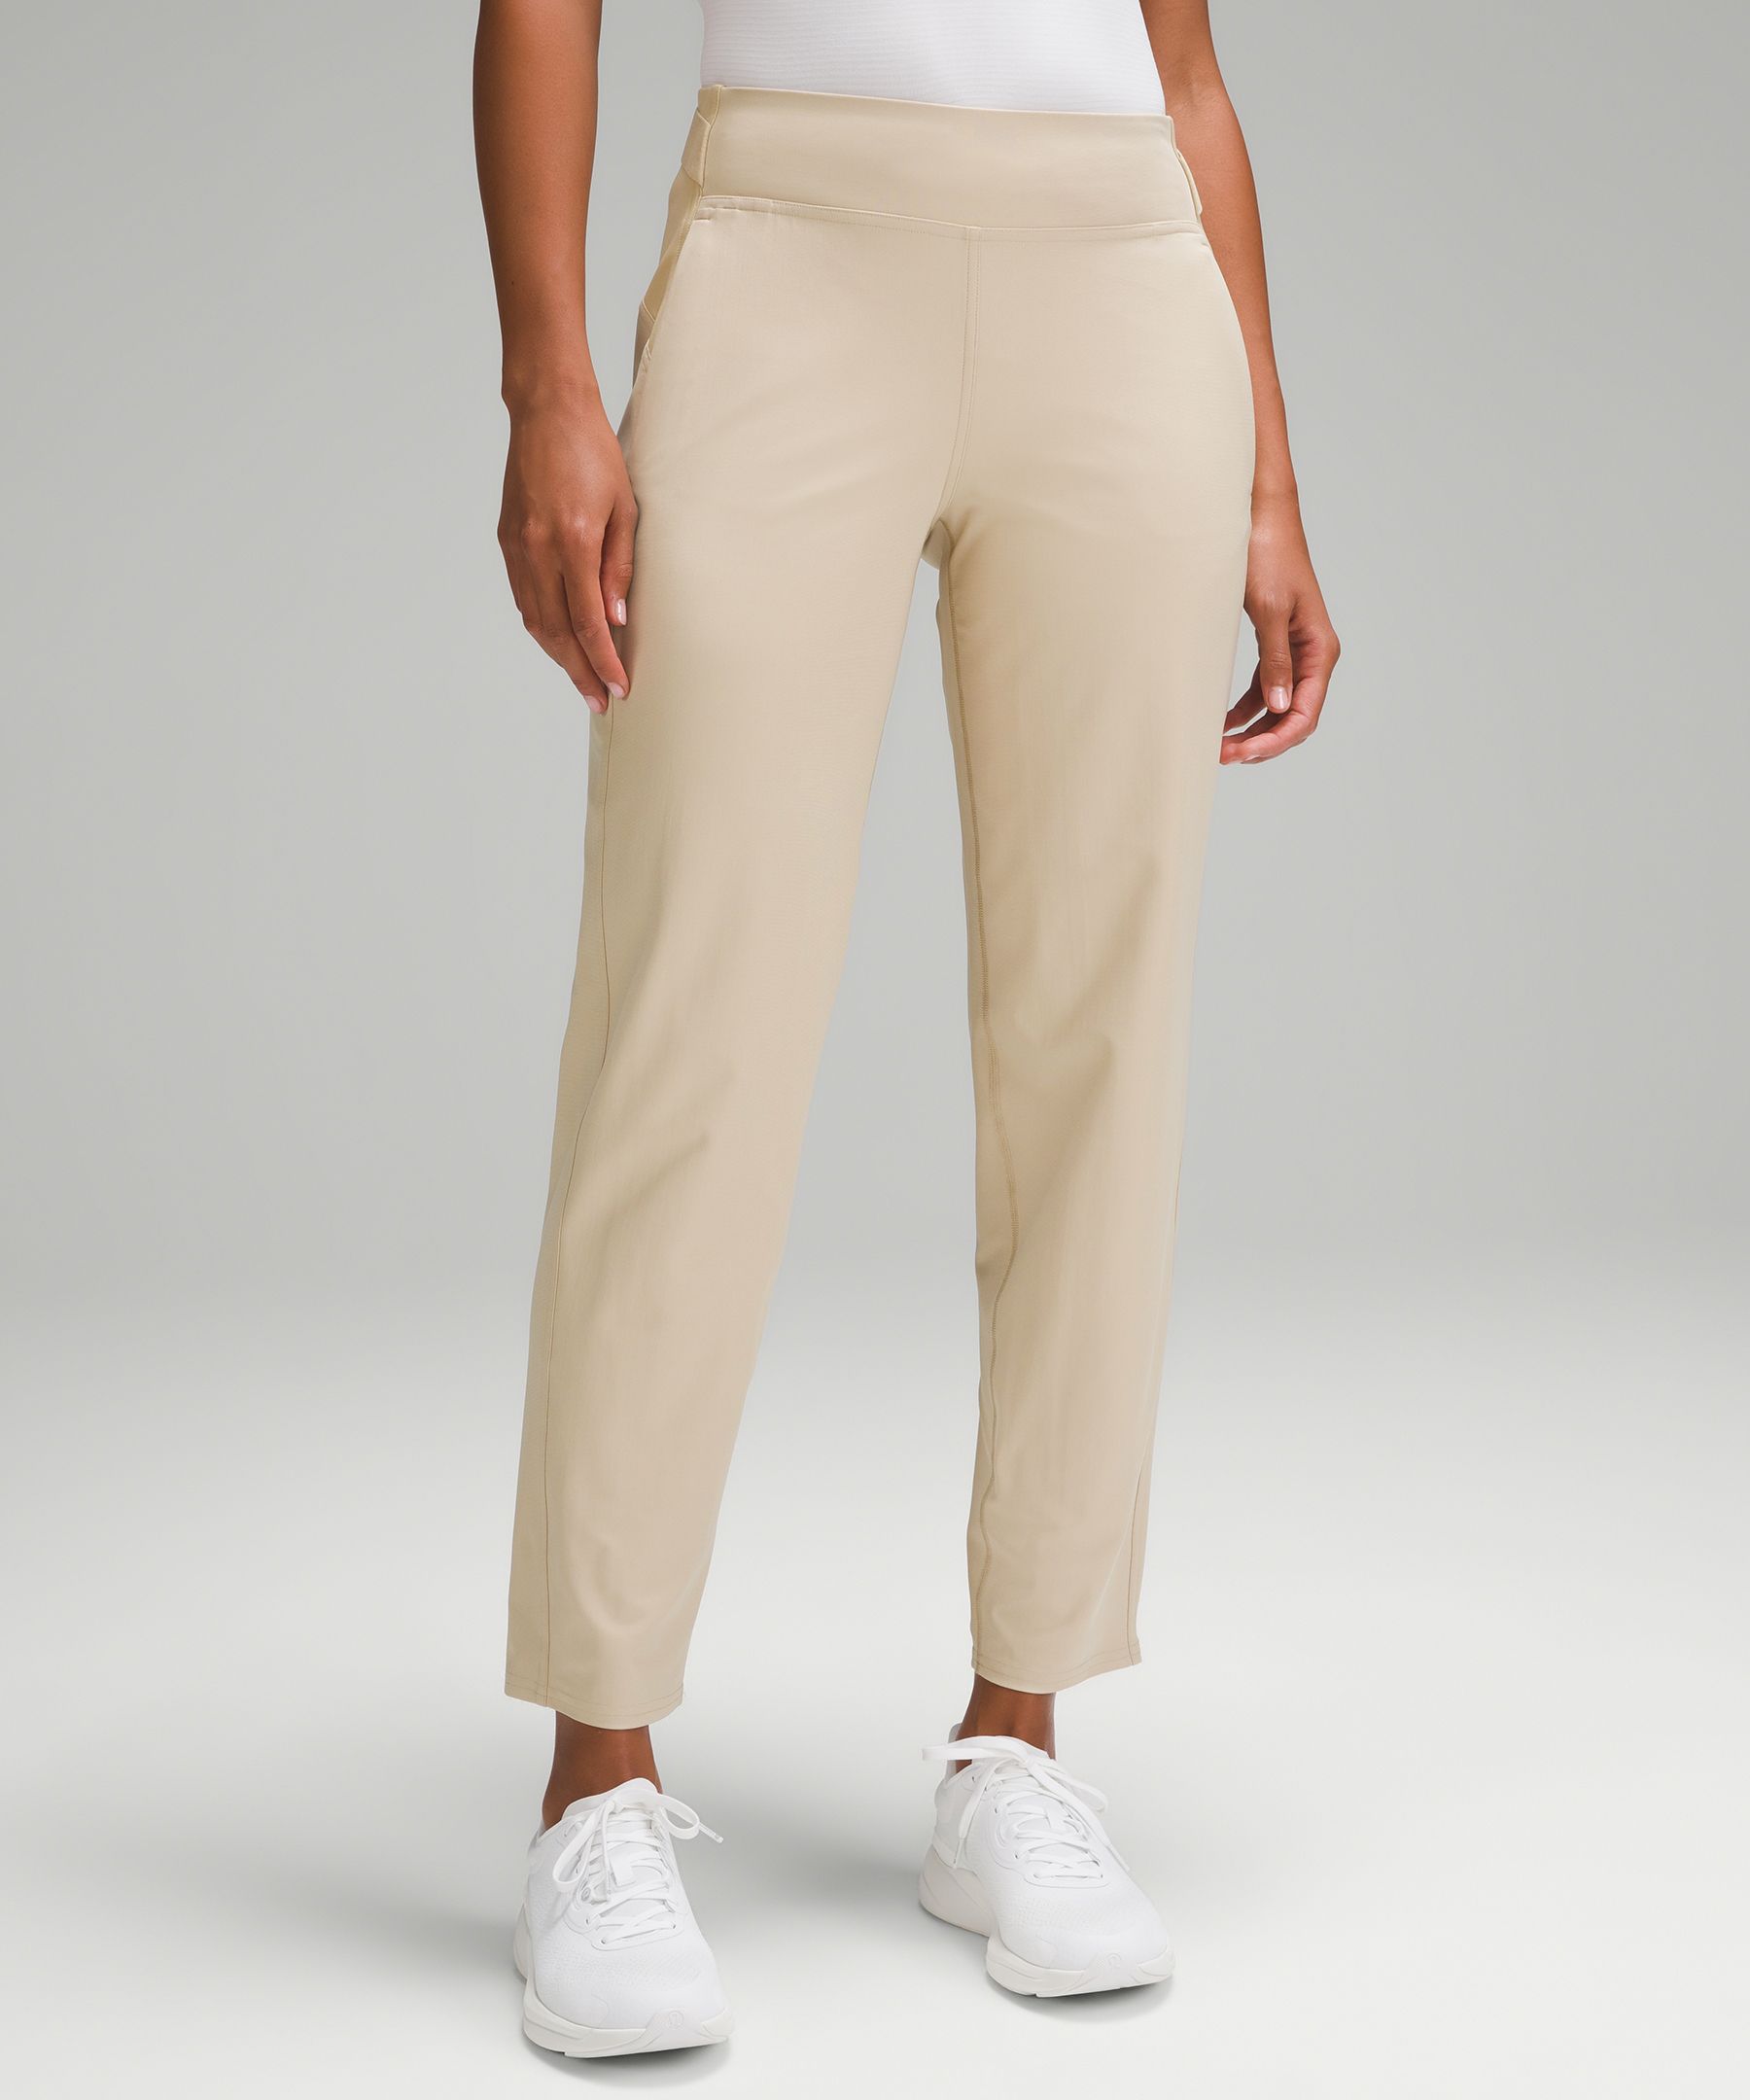 Warpstreme Multi-Pocket Mid-Rise Golf Pant 28, Women's Pants